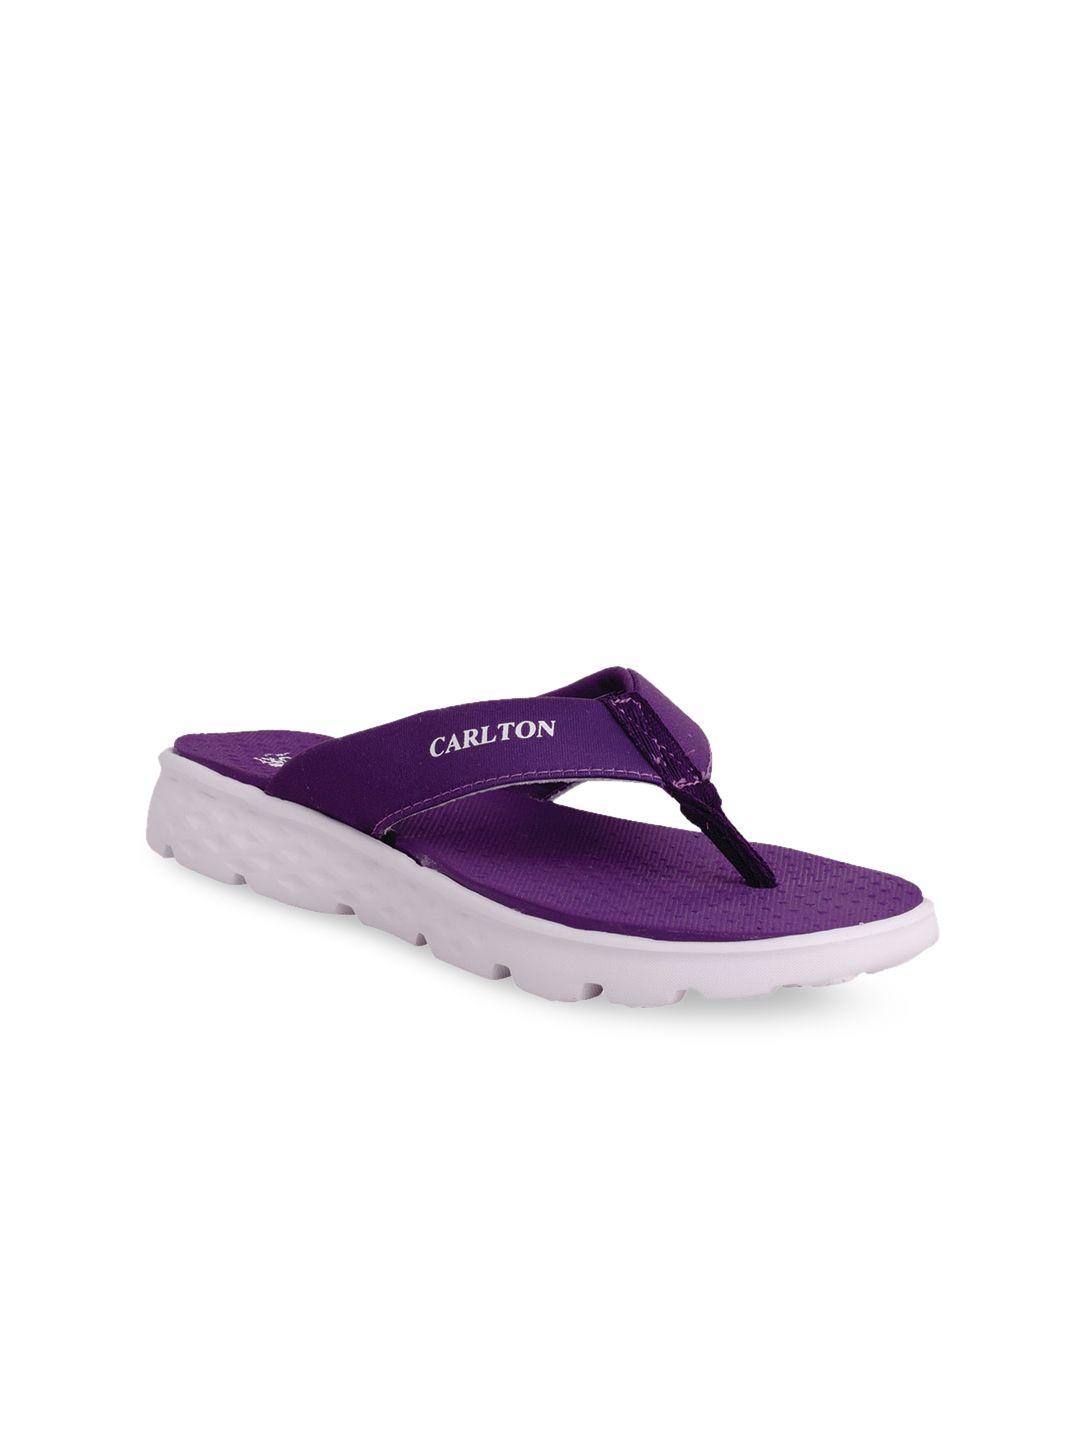 carlton london sports women purple printed thong flip-flops